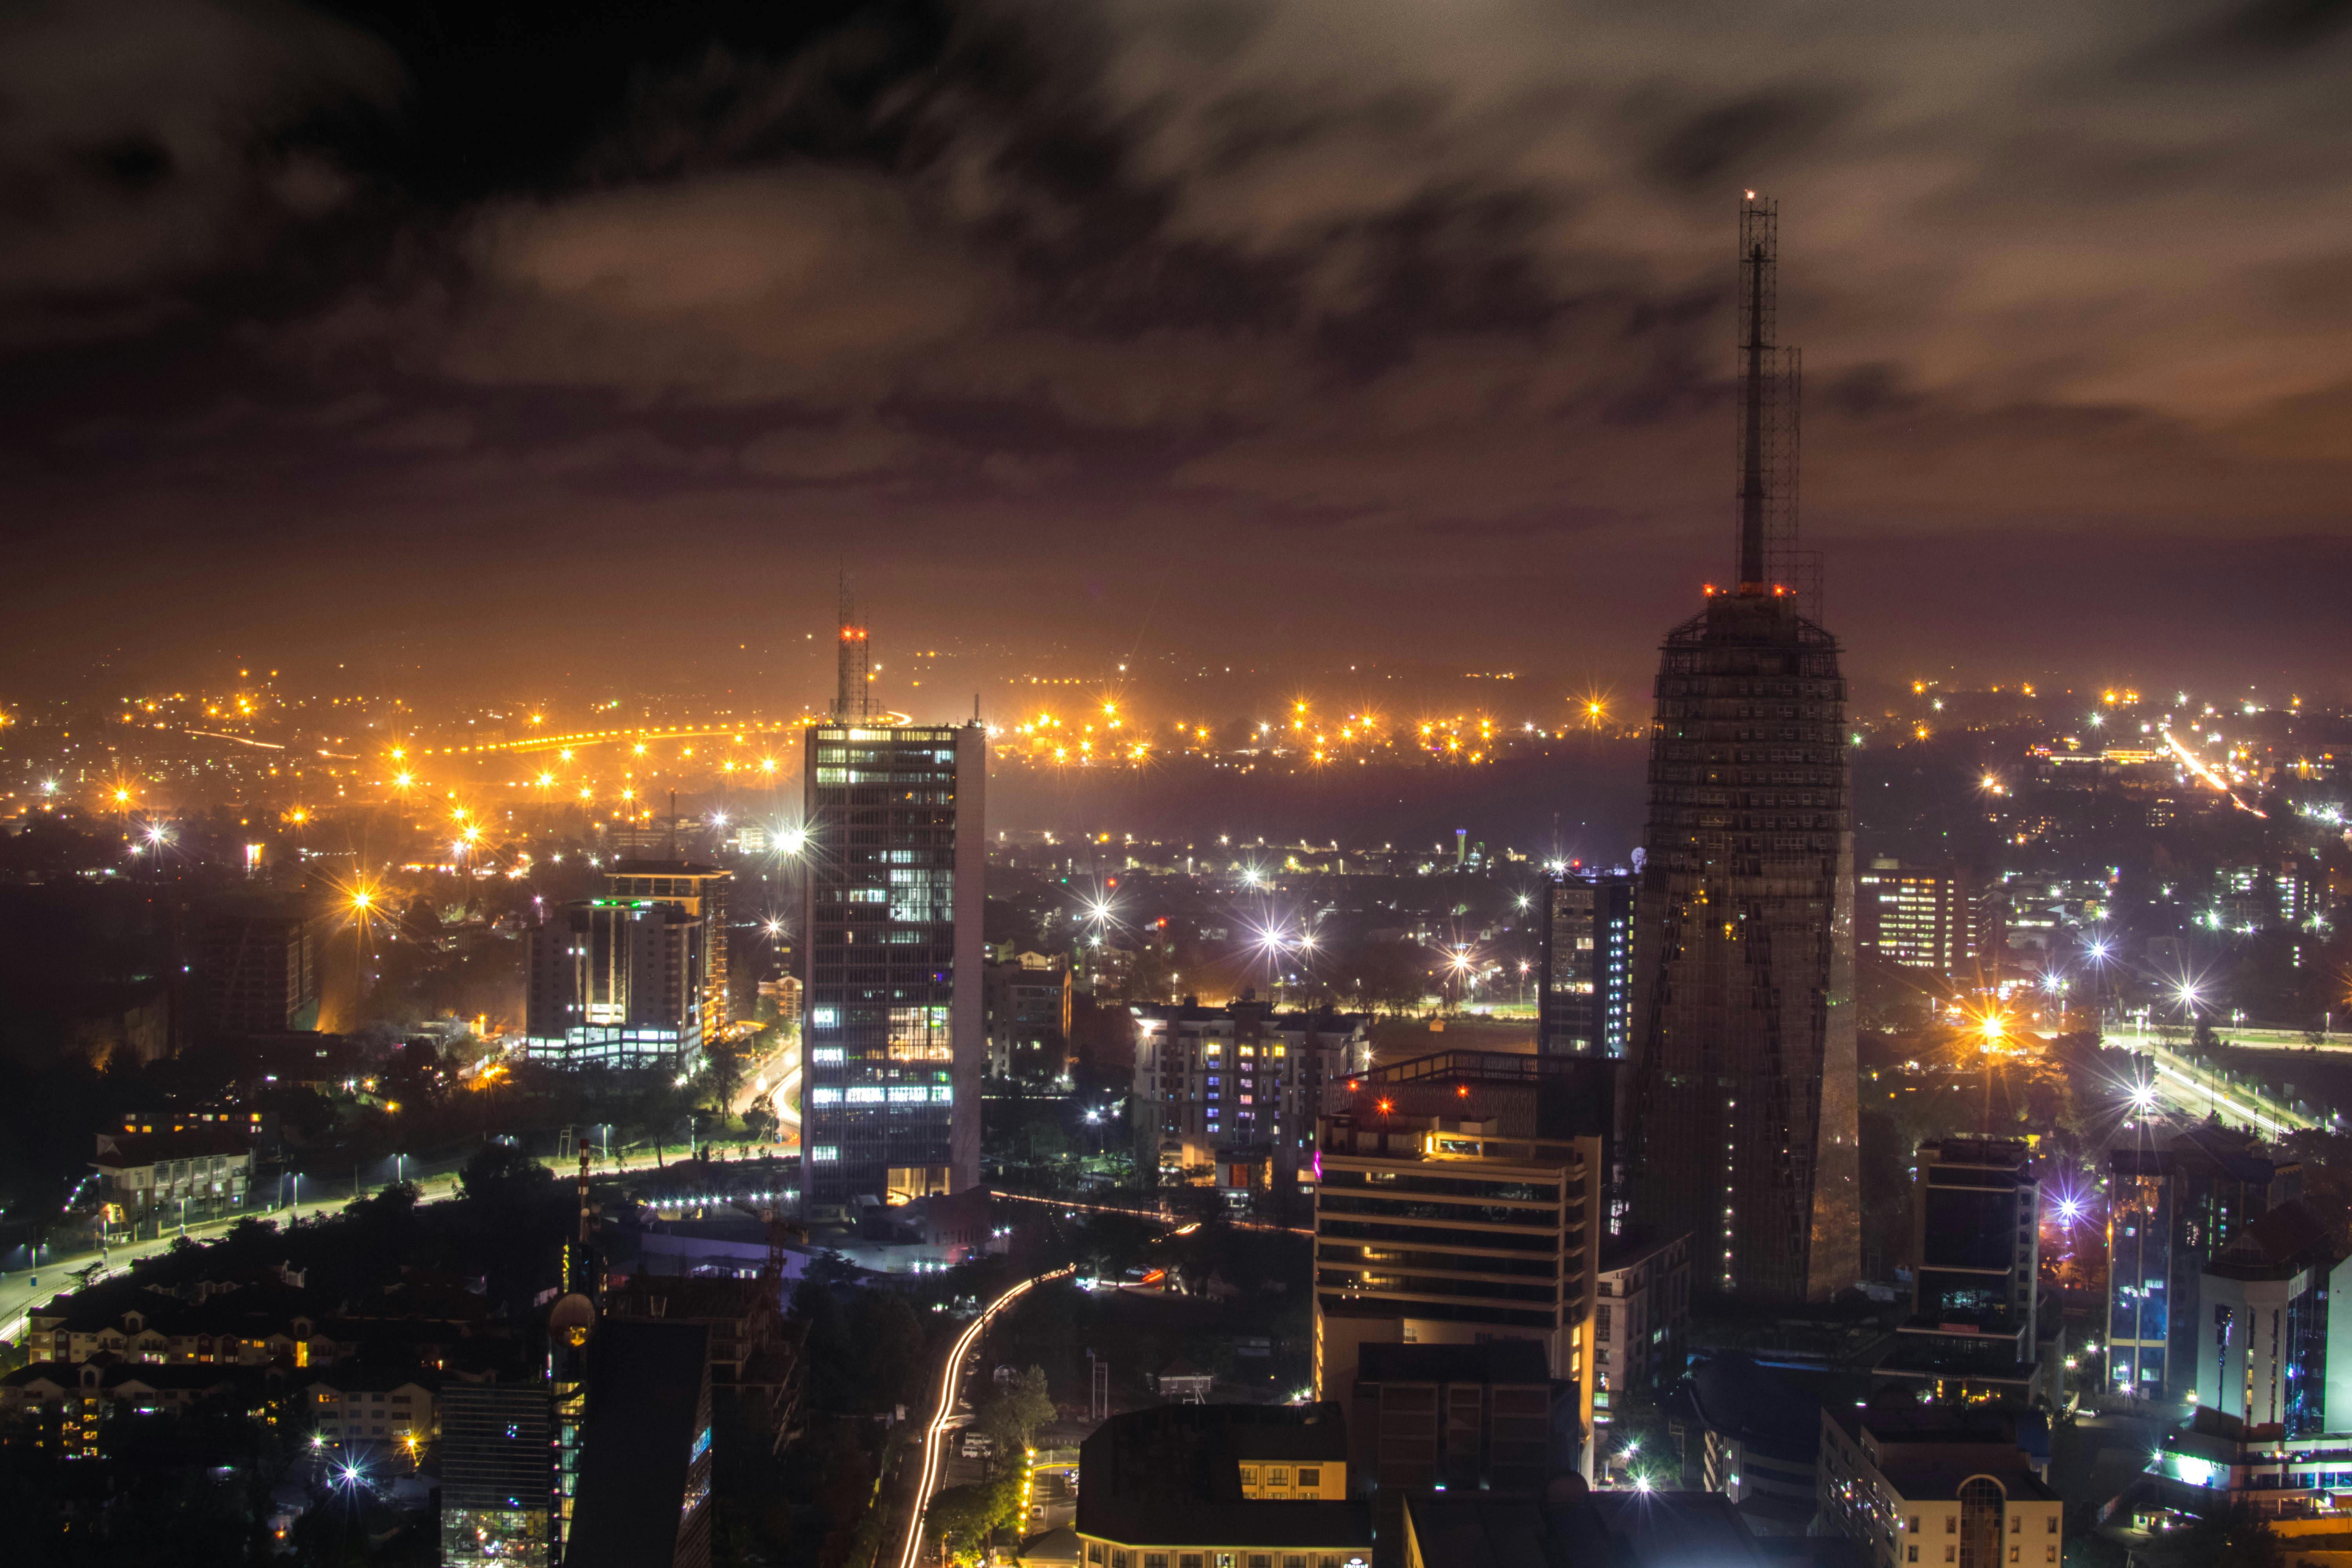 Free stock photo of Kenya, Nairobi - 6000 x 4000 jpeg 2202kB